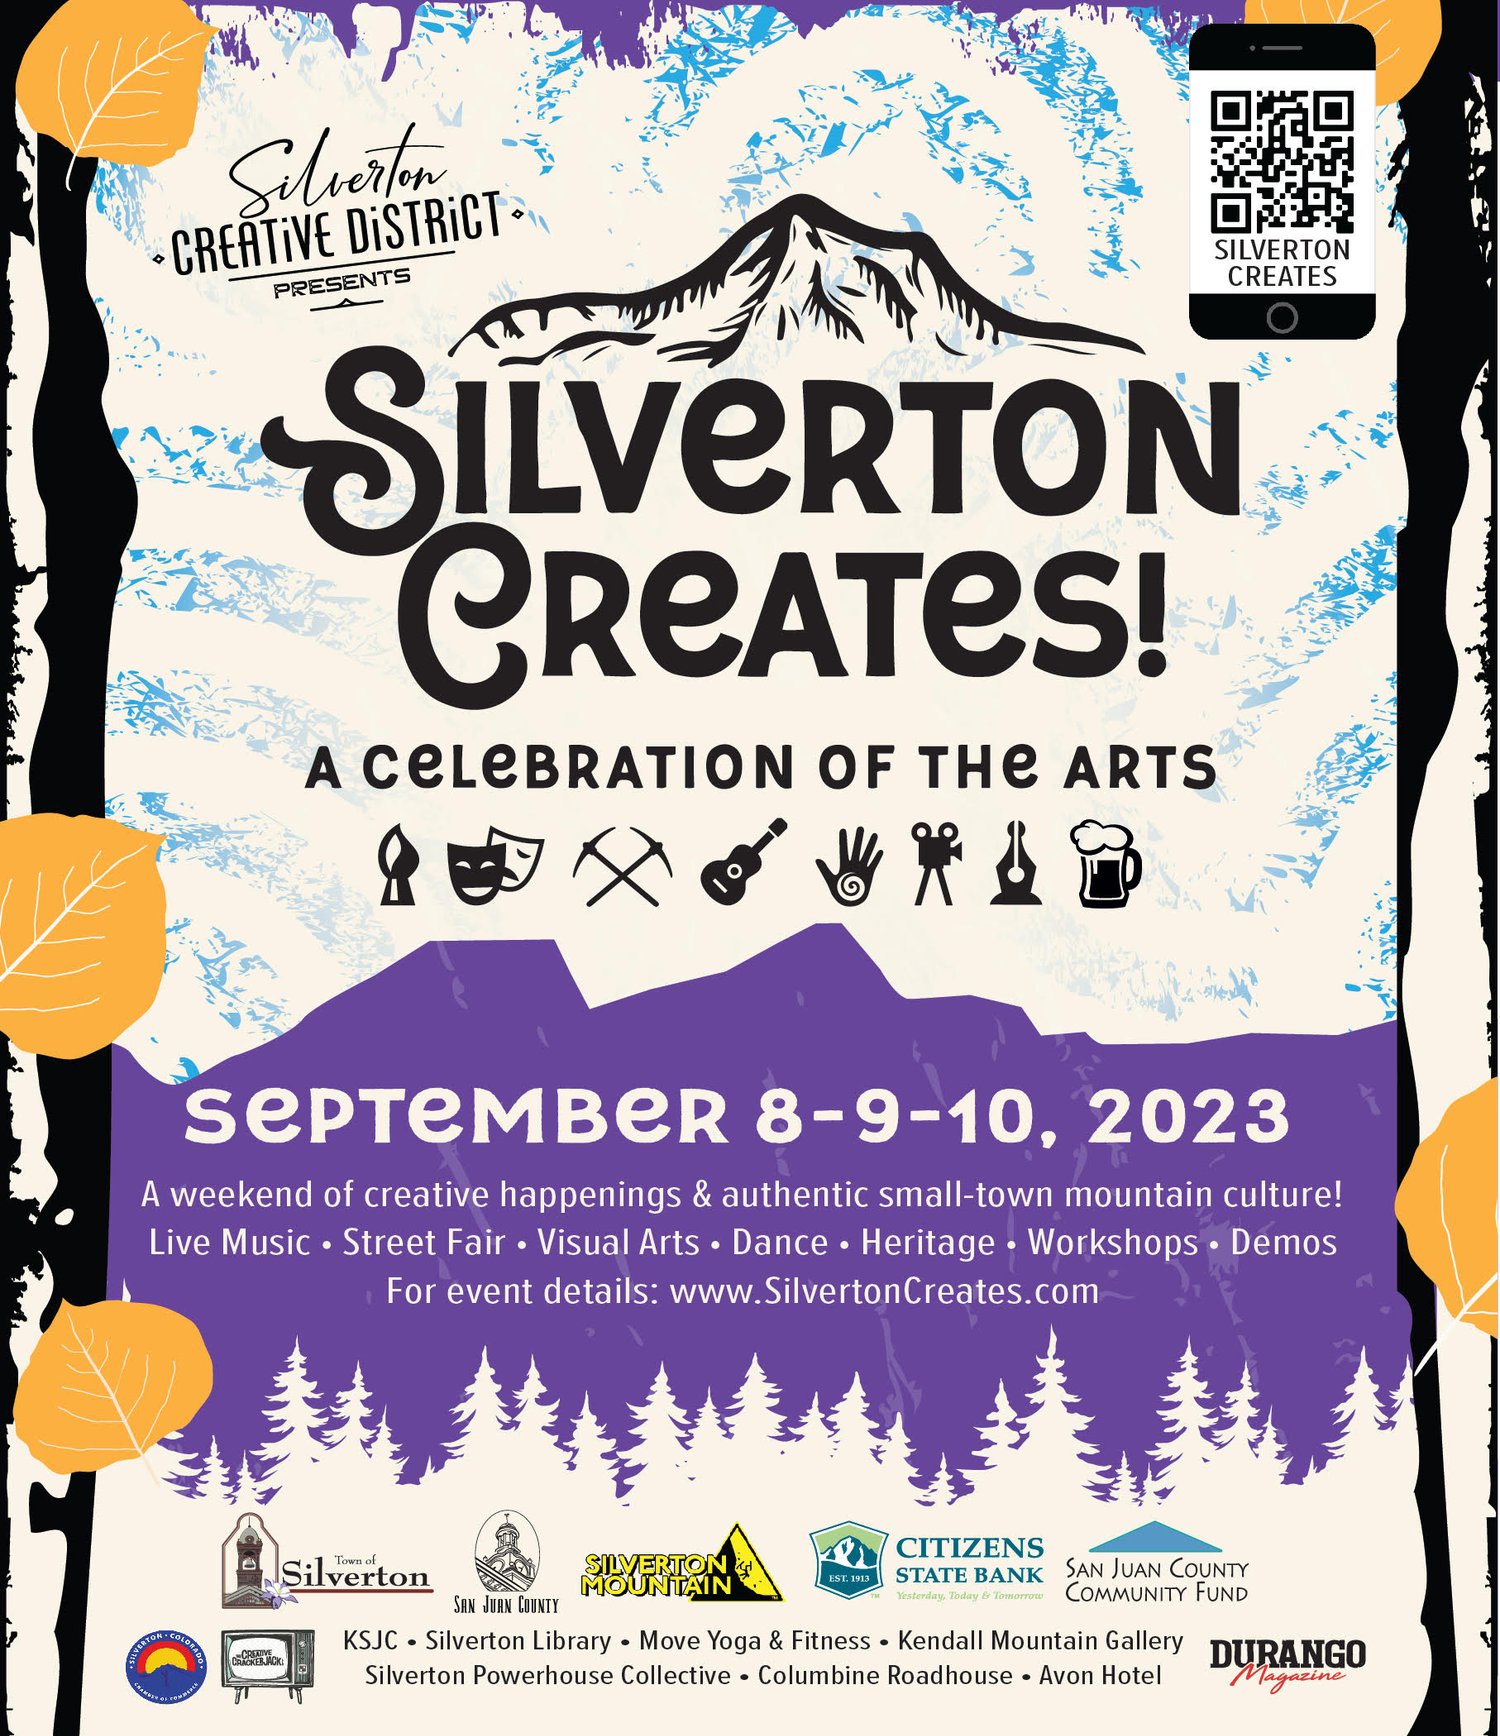 Silverton Creative District Silverton Creates! A Celebration of the Arts